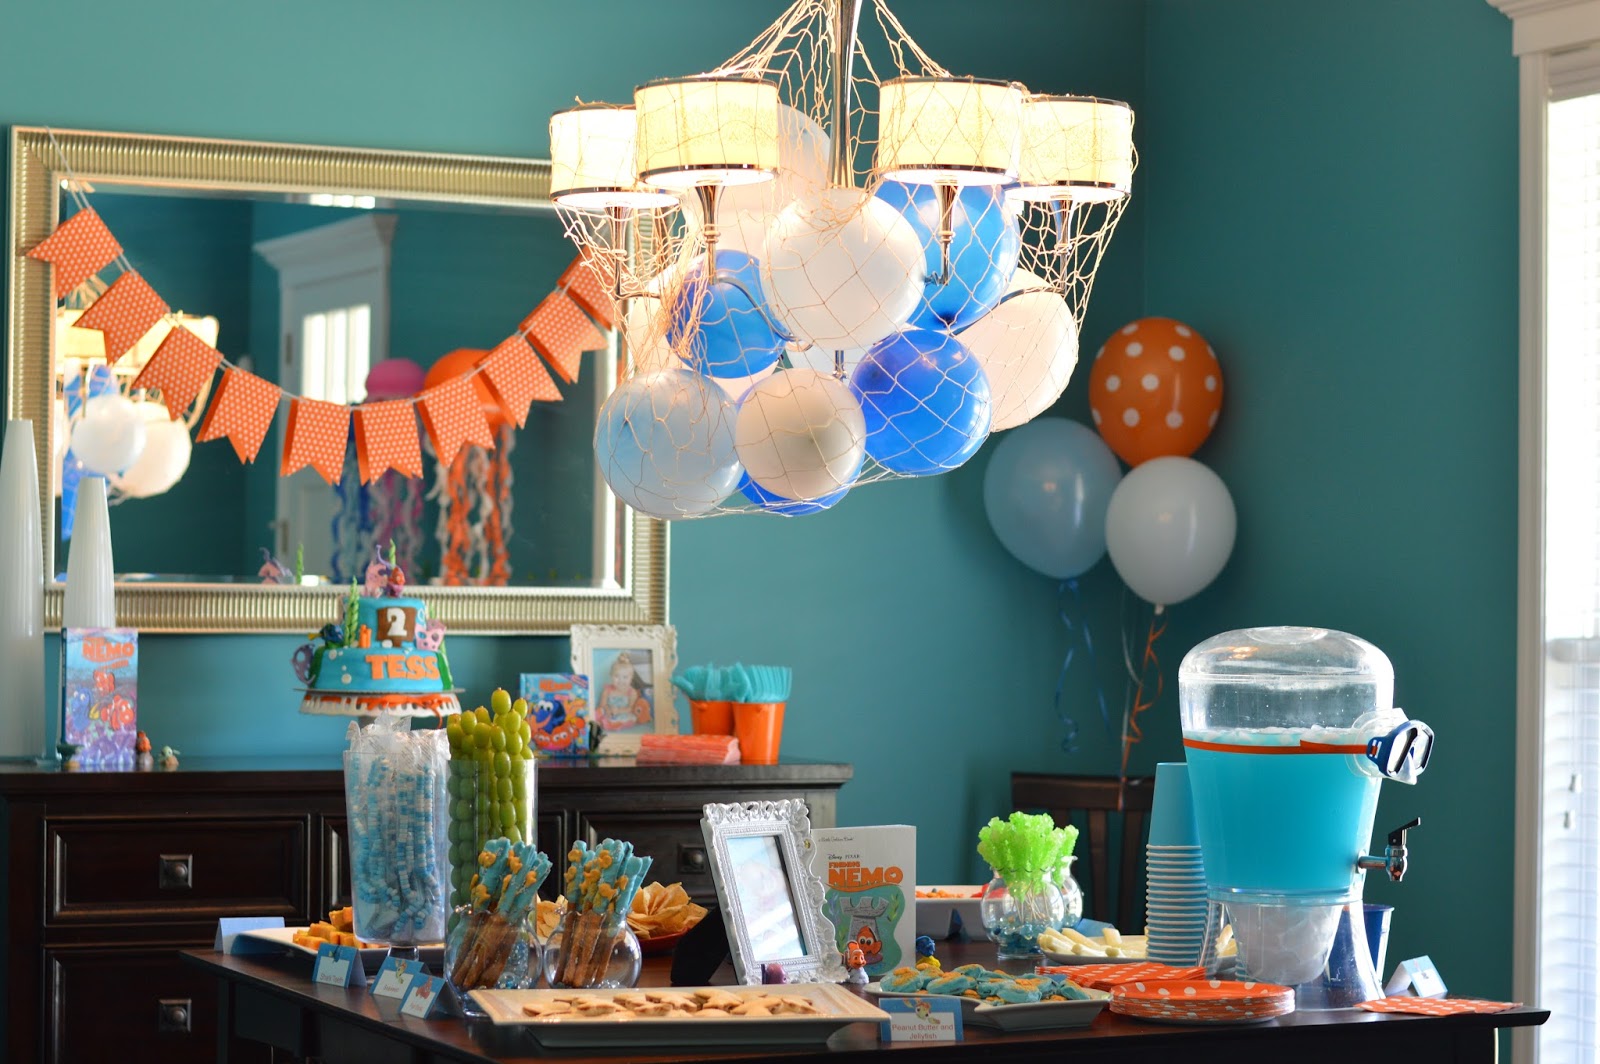 Finding Nemo birthday party